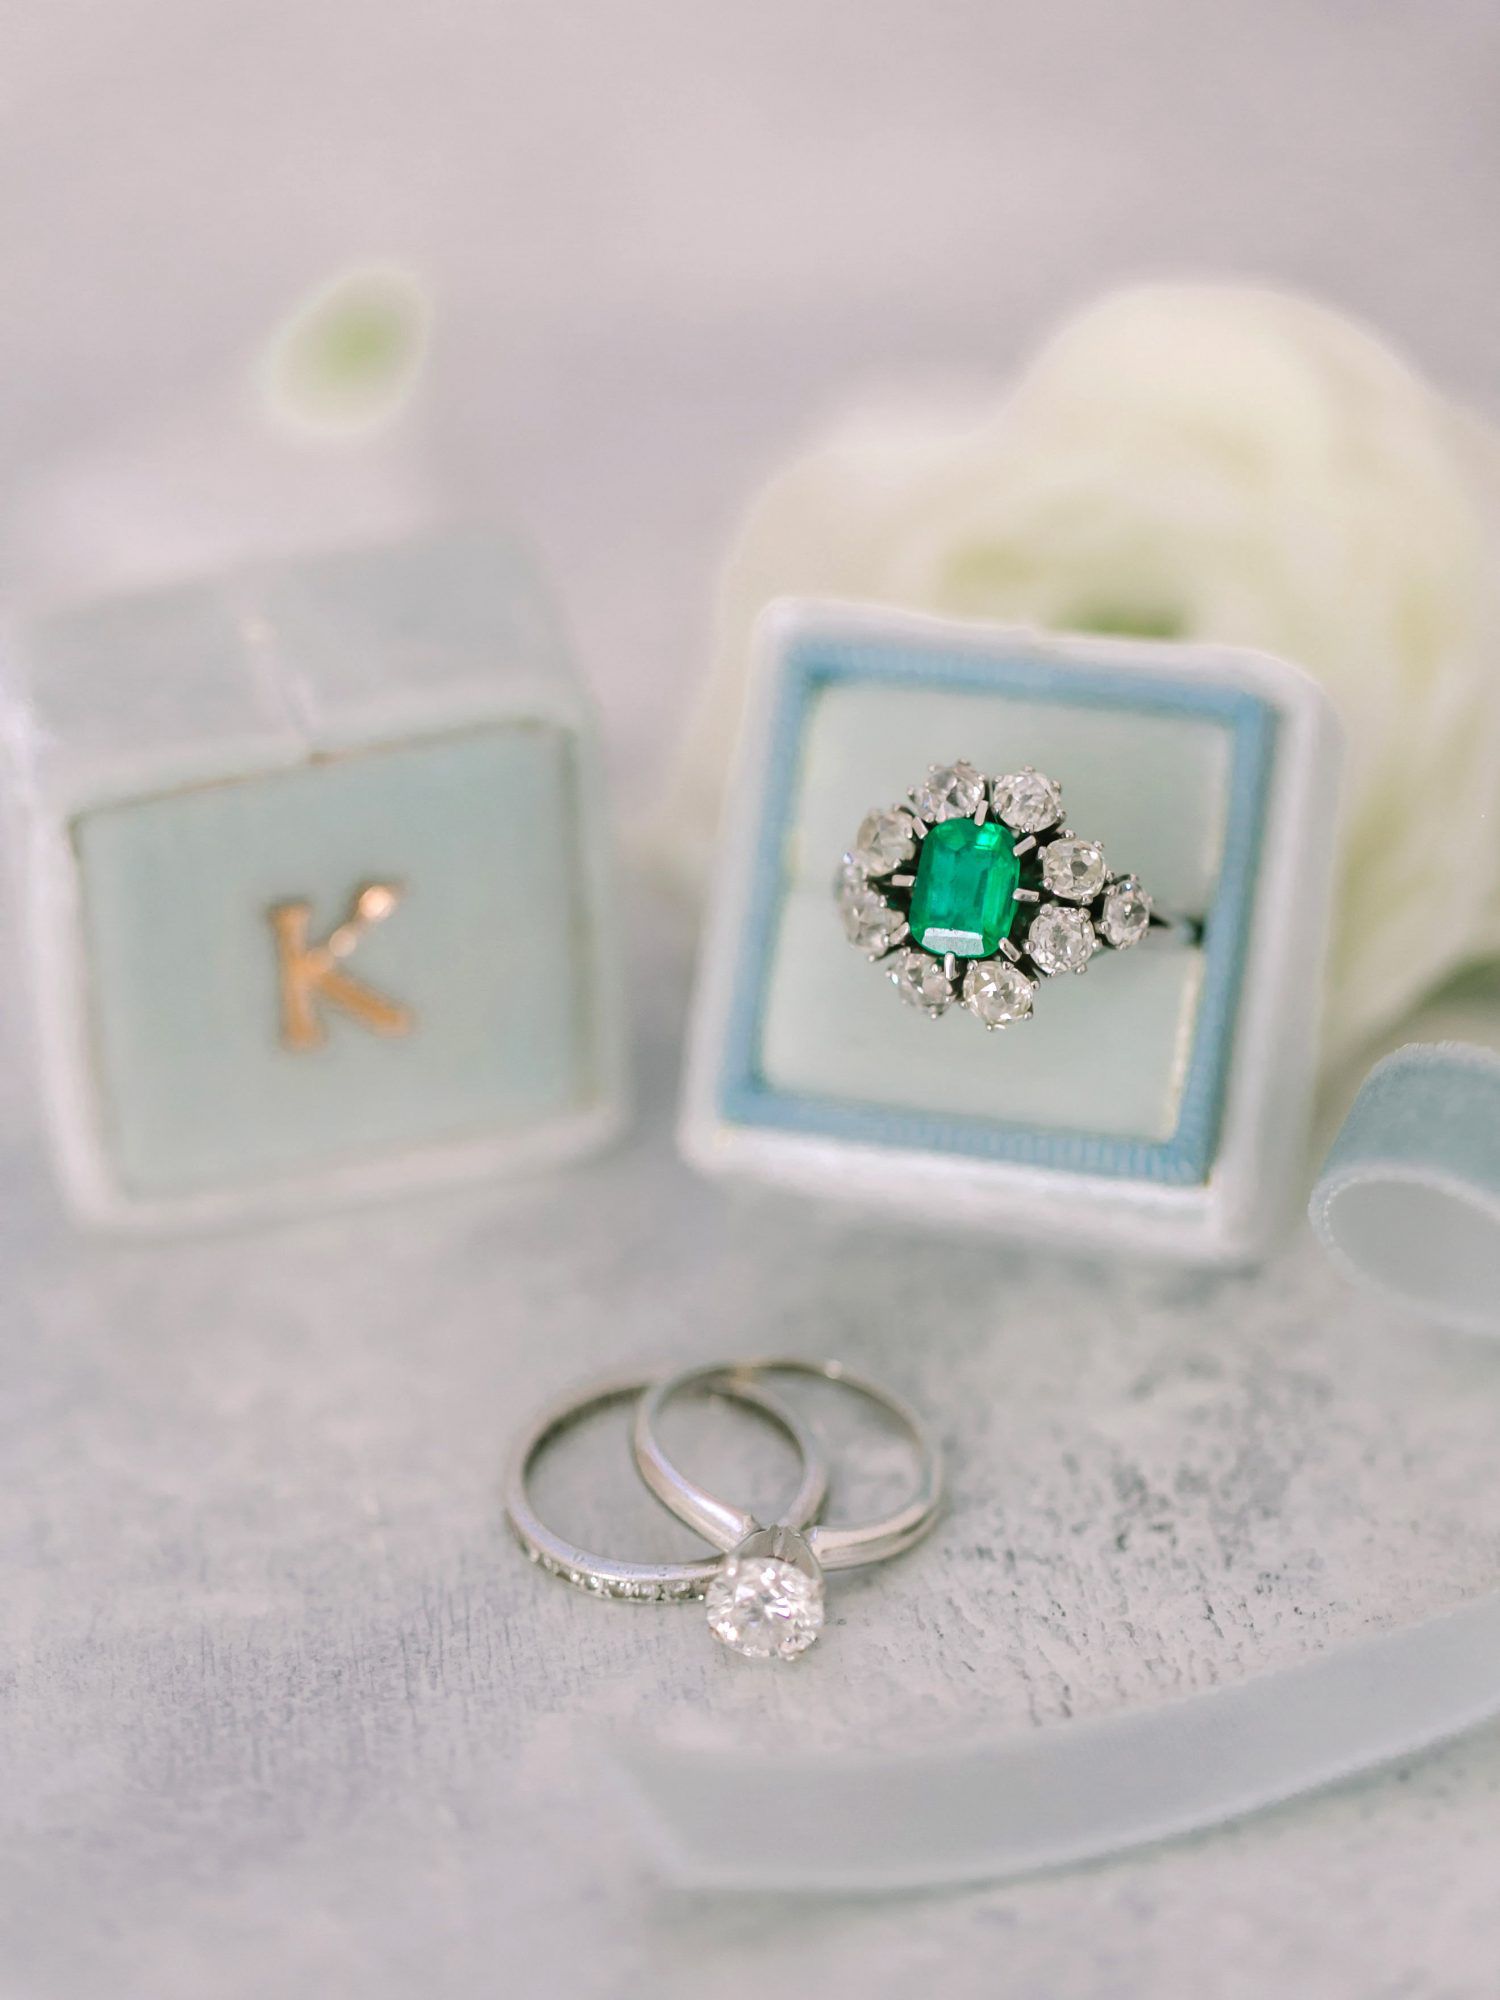 Diamond Rock Shape Design Baking Wedding Engagement Ring